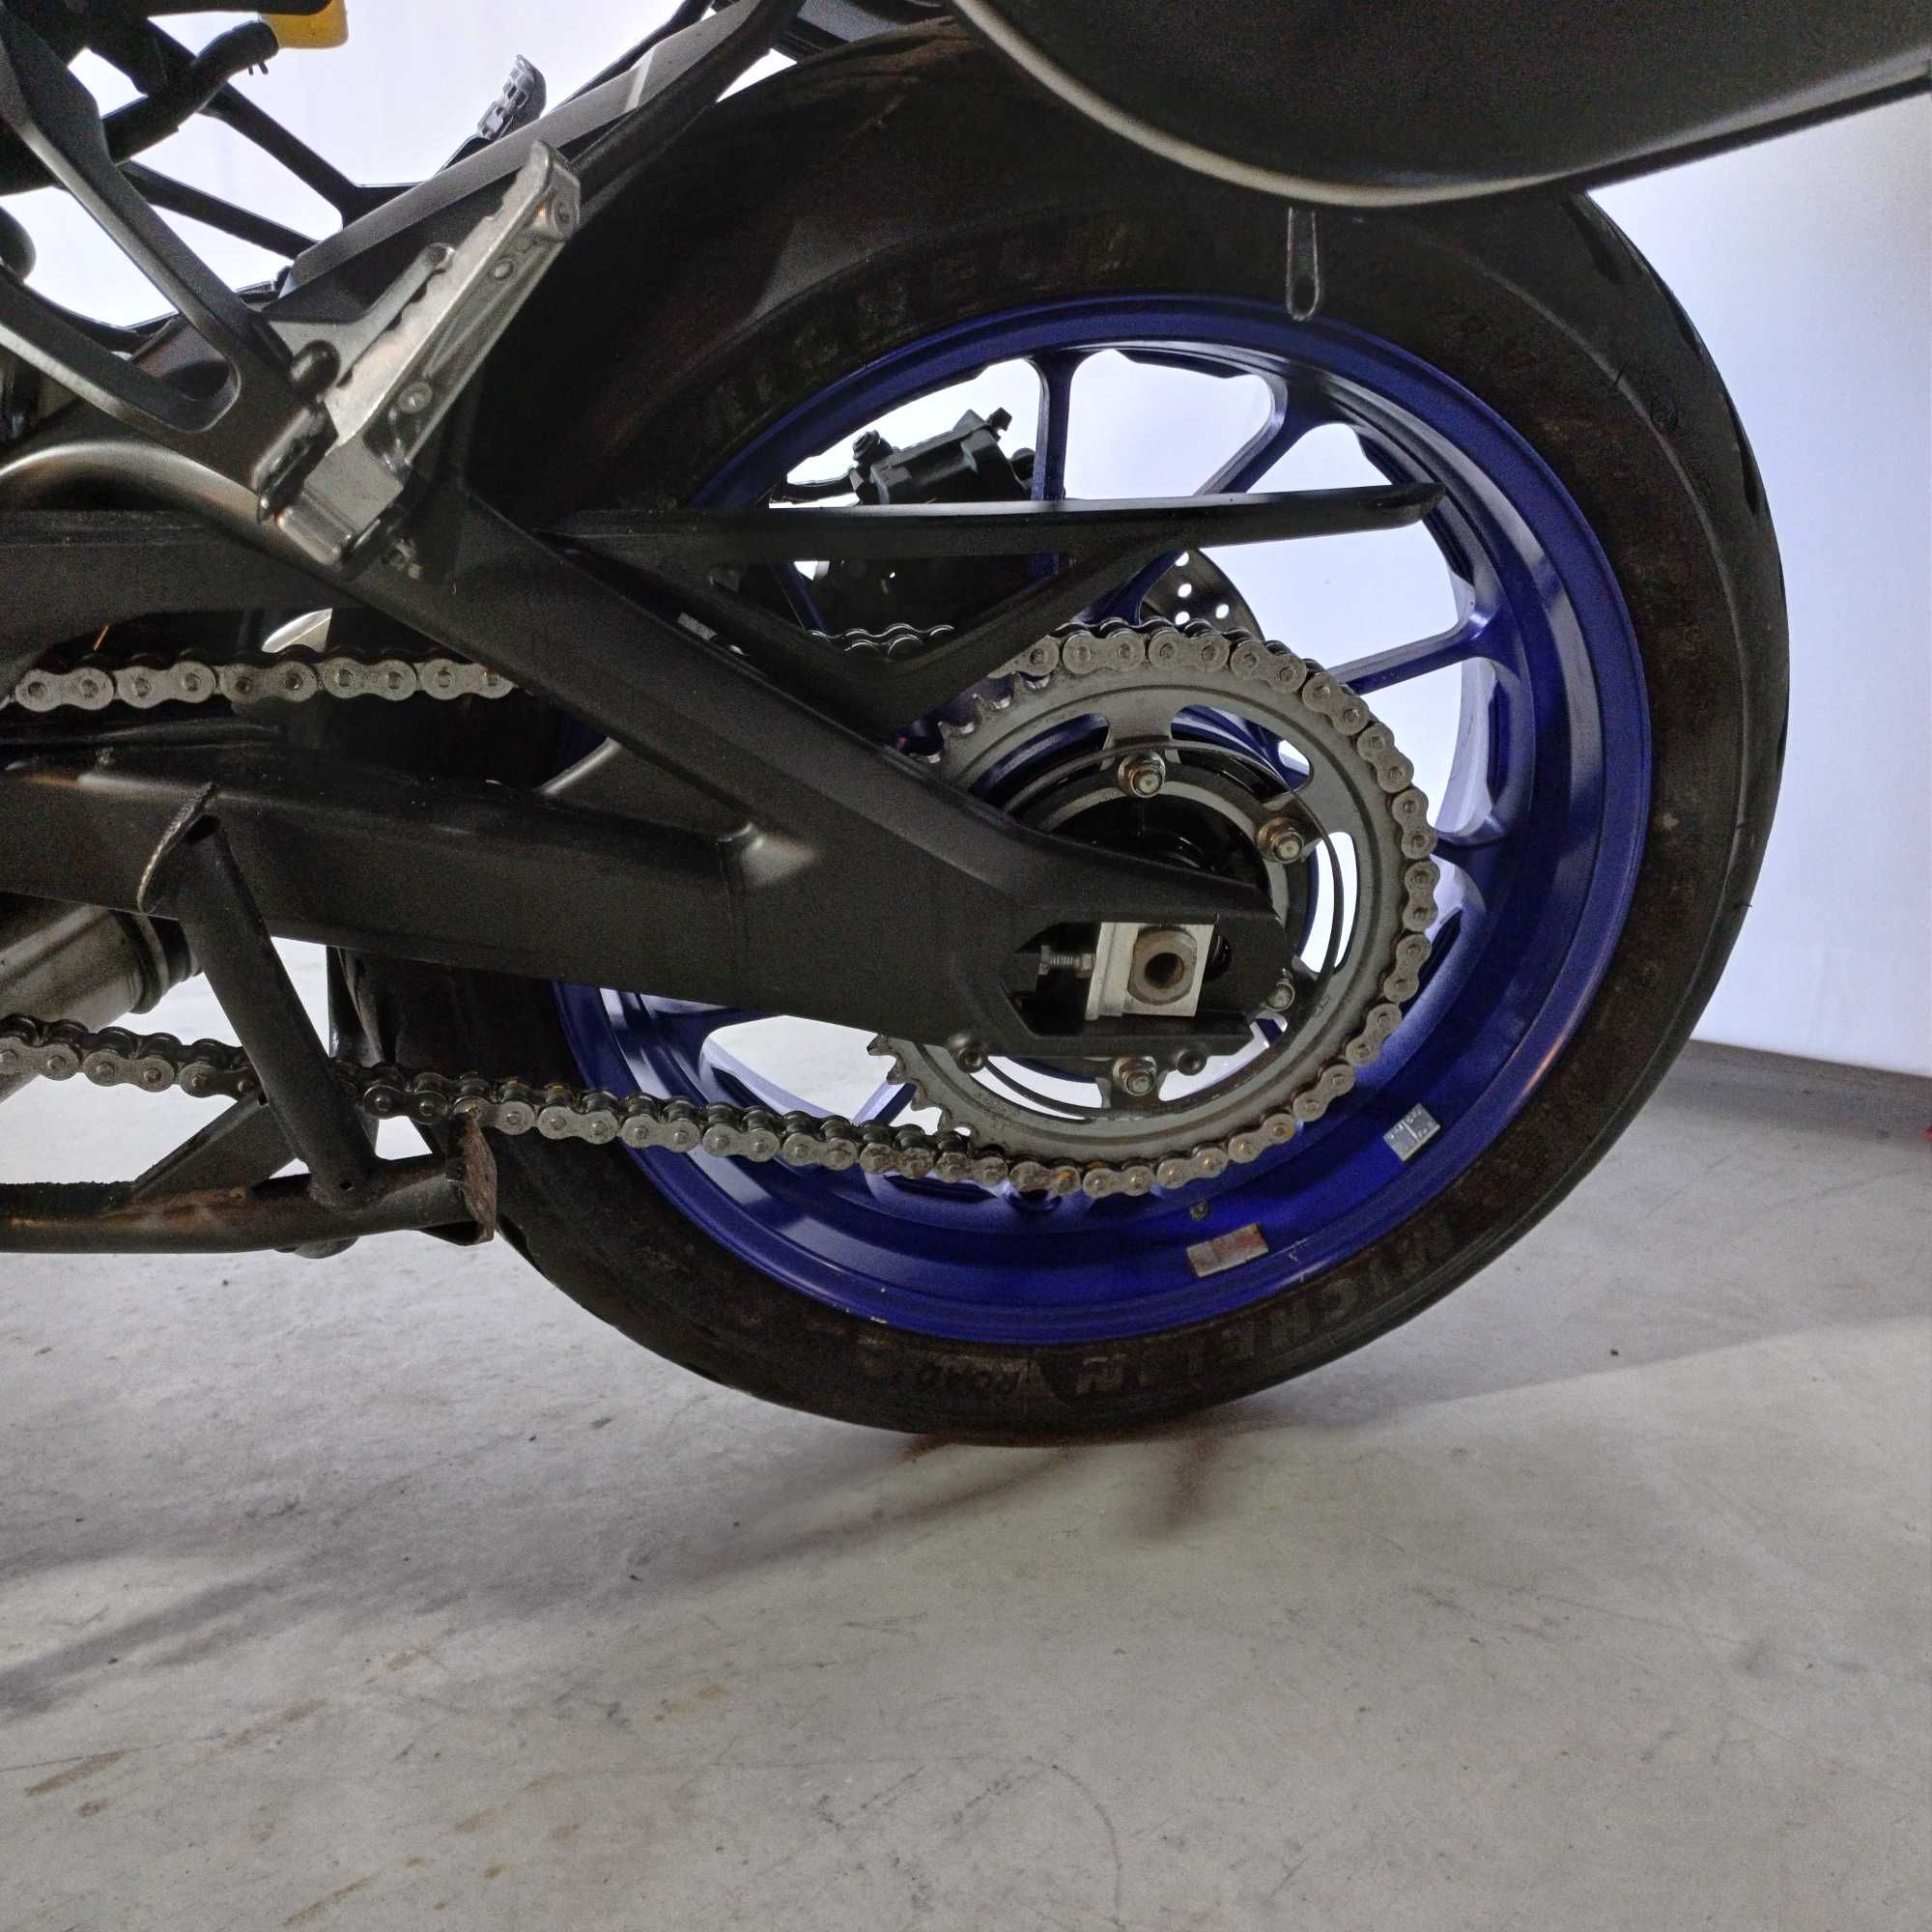 Motocicleta Yamaha Tracer 900 ABS | Y13073 | motomus.ro